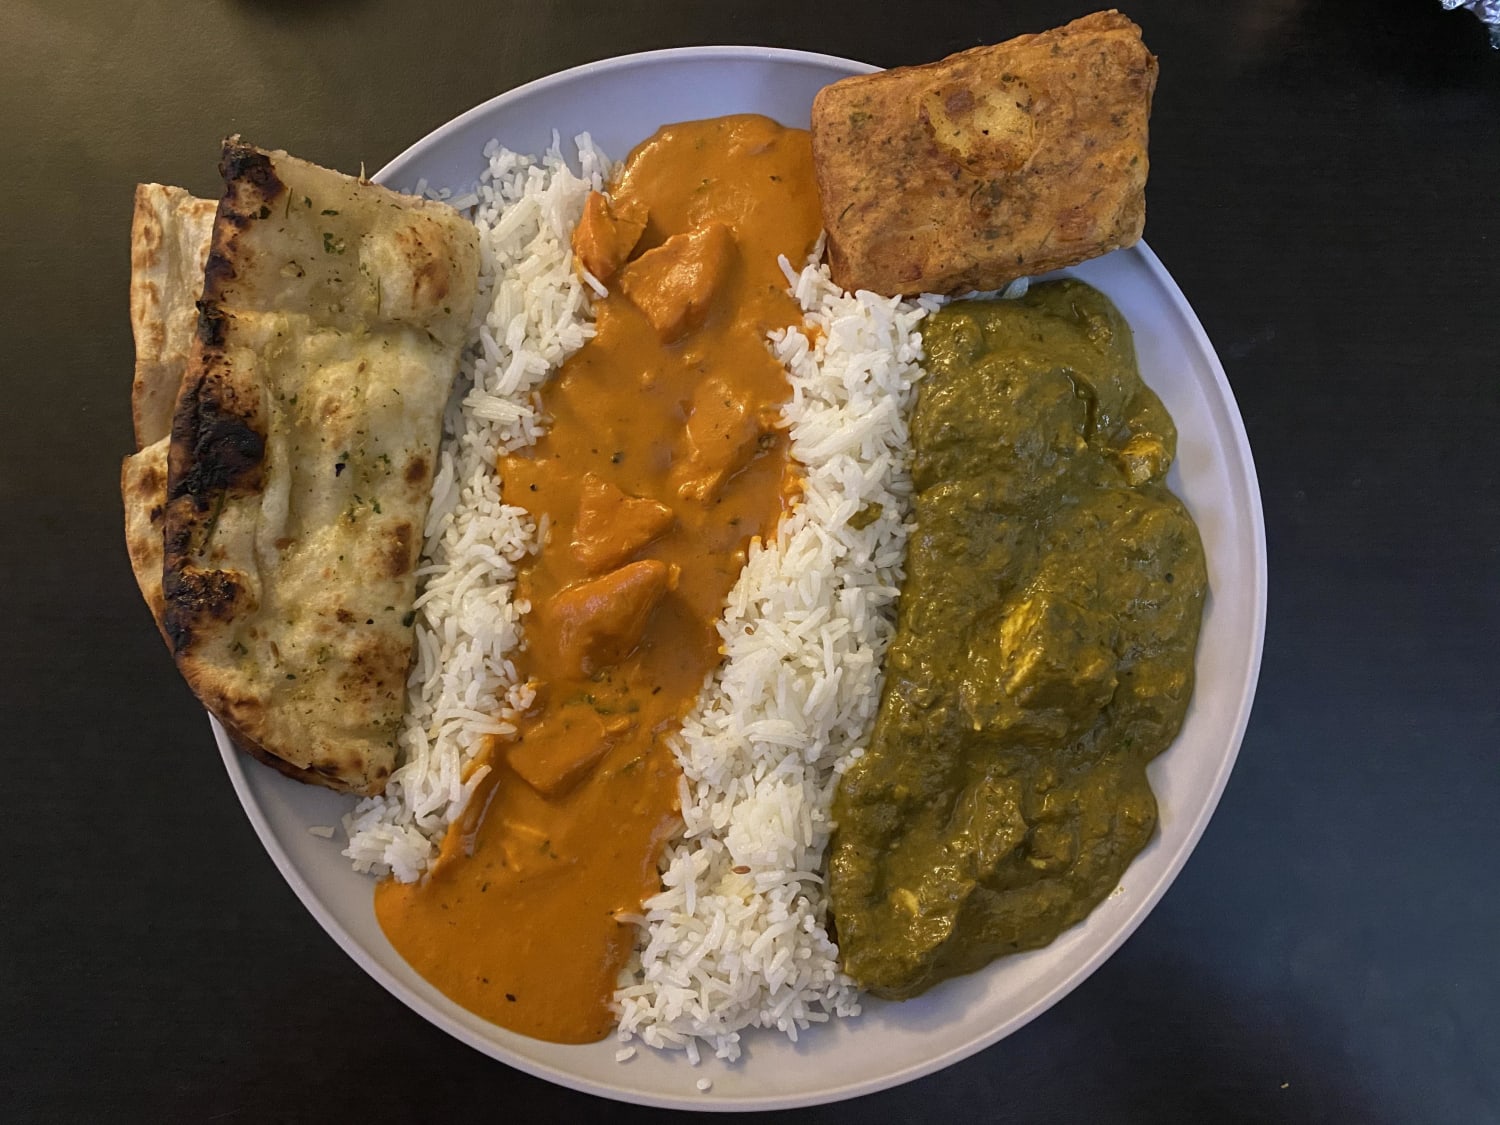 [I Ate] Chicken tikka masala, saag paneer, cheese pakora with garlic naan